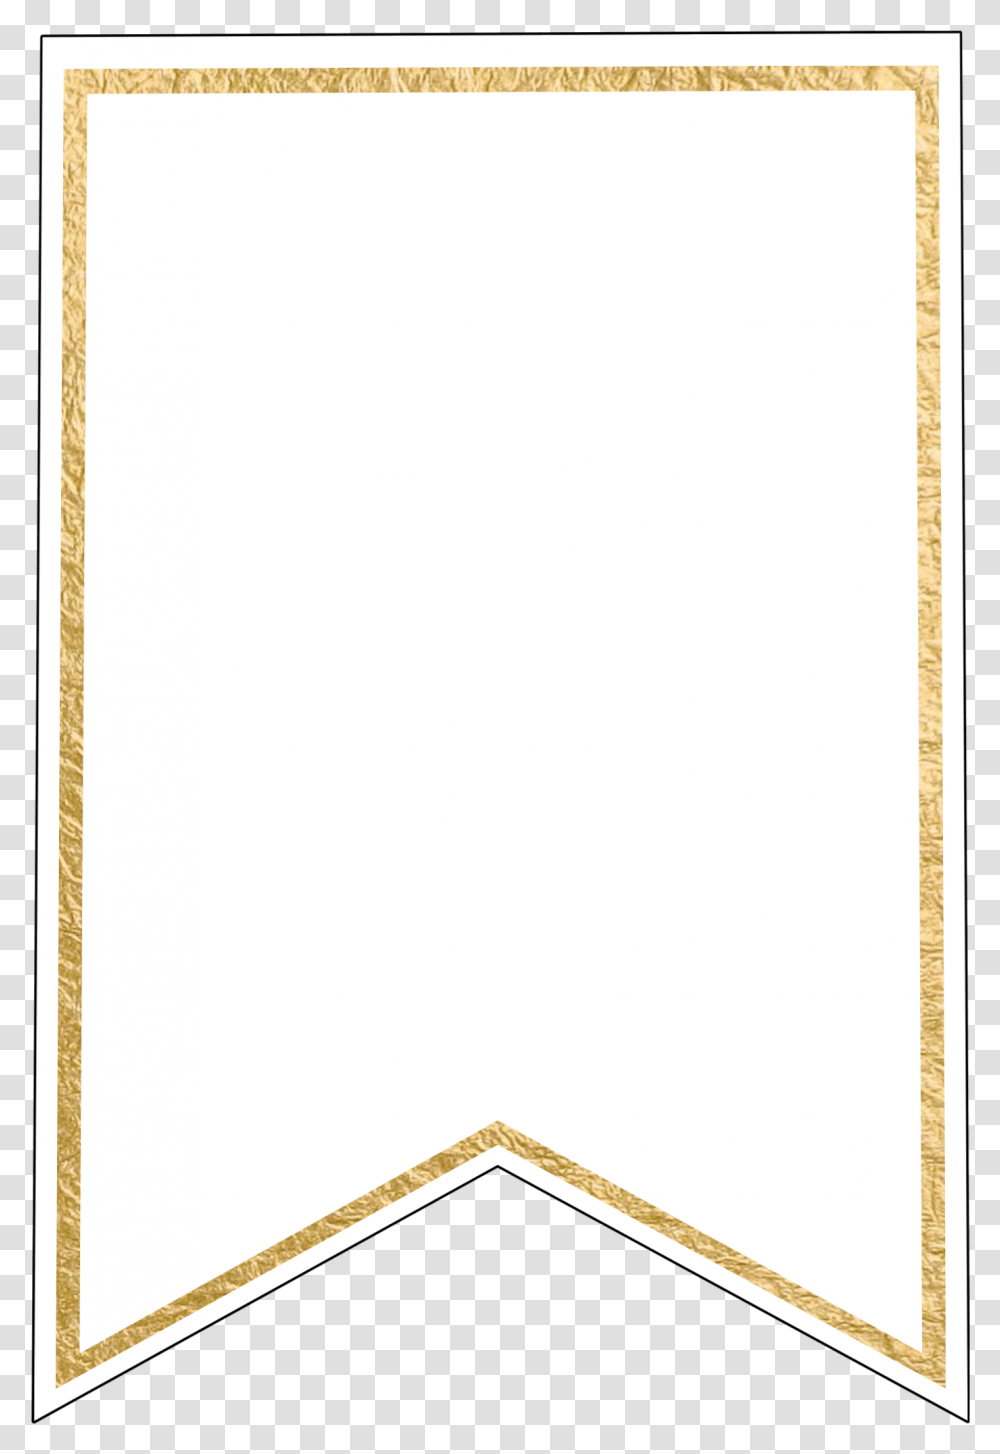 Banner Clipart Letter Banderines Dorados Para Imprimir, Rug, Mirror, White Board, Page Transparent Png